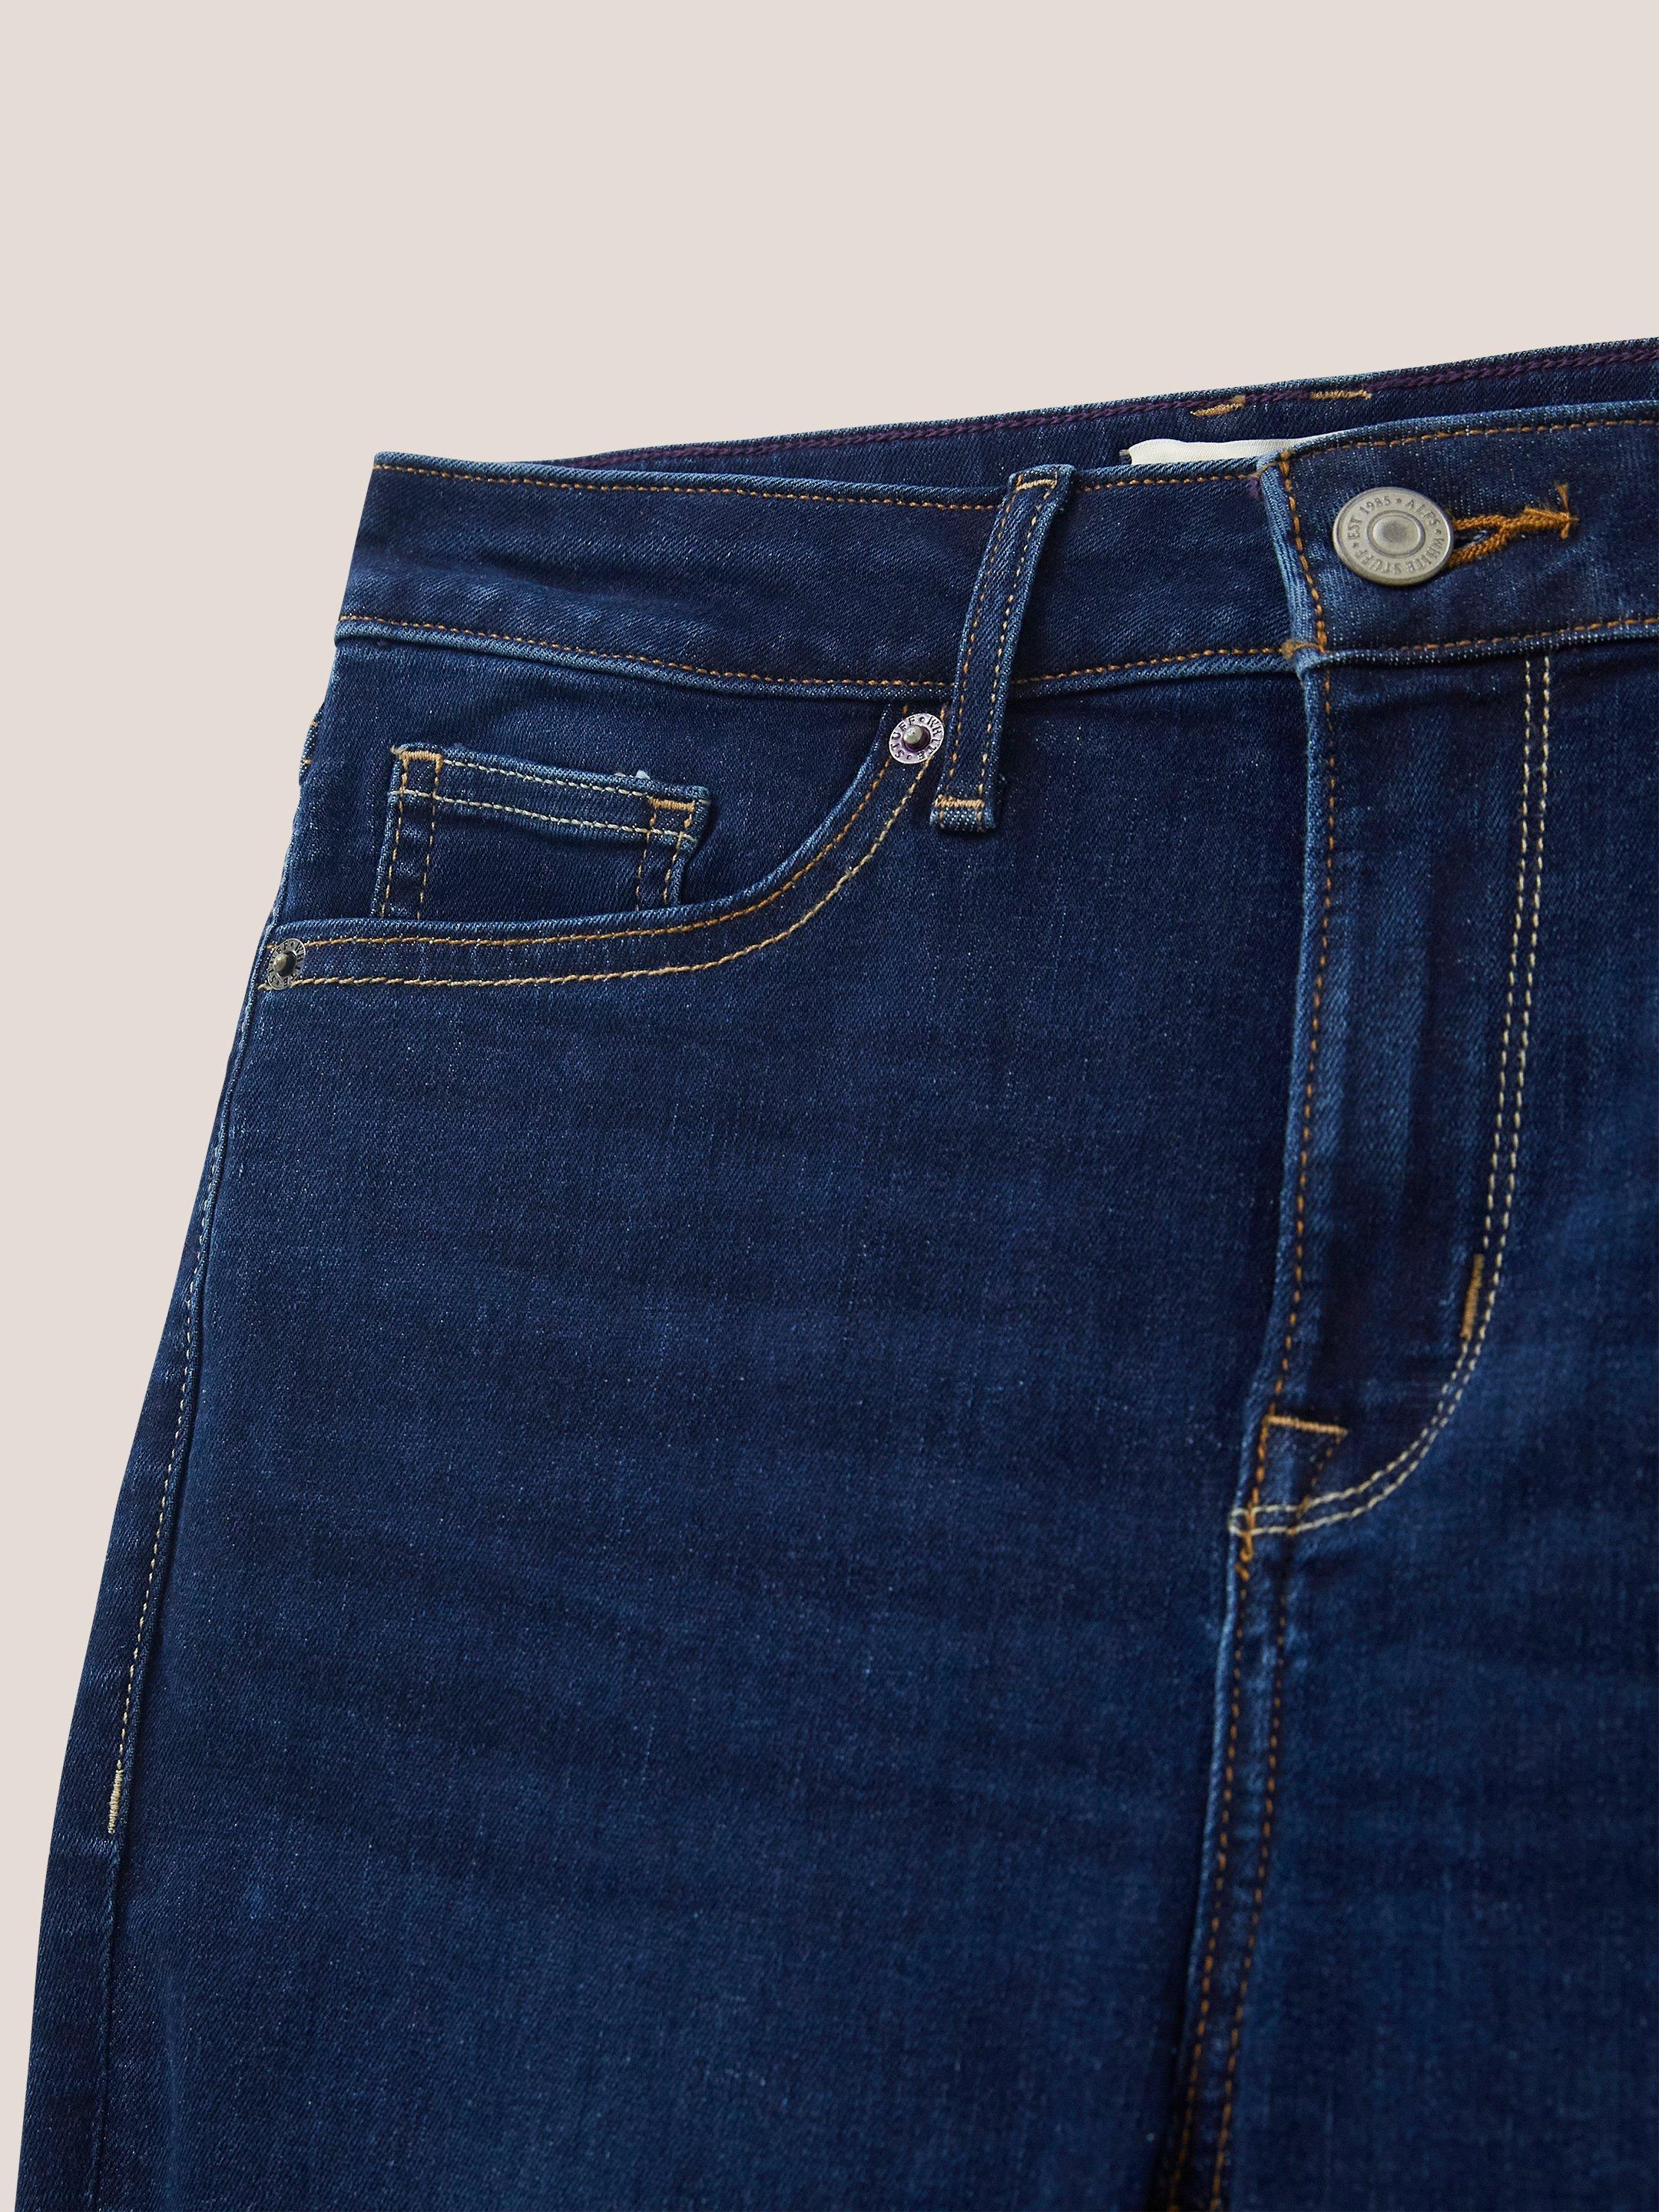 Amelia Skinny Jeans in MID DENIM - FLAT DETAIL